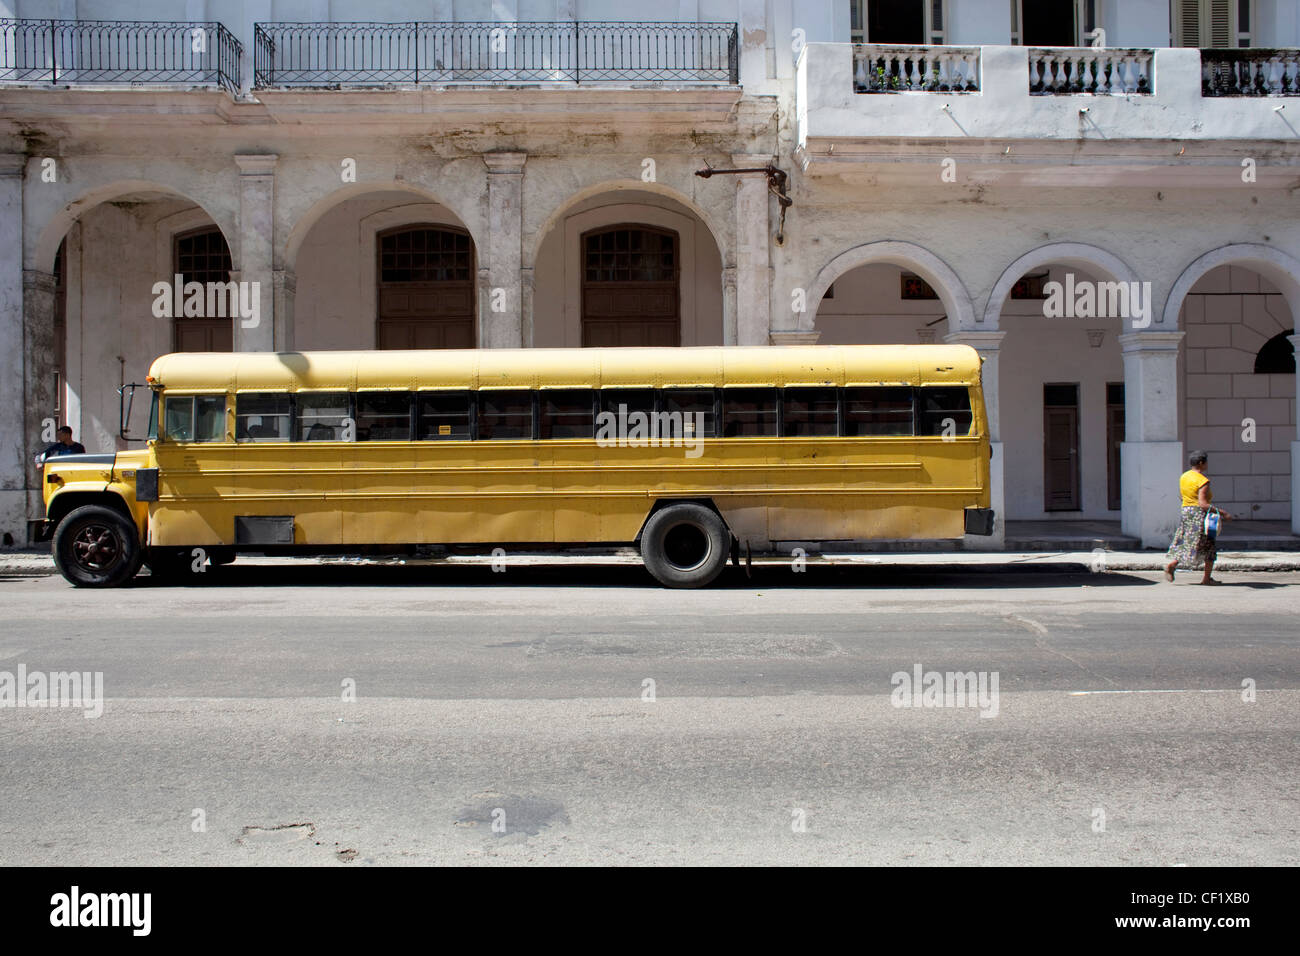 Yellow school bus parked on the street in Havana, Cuba Stock Photo